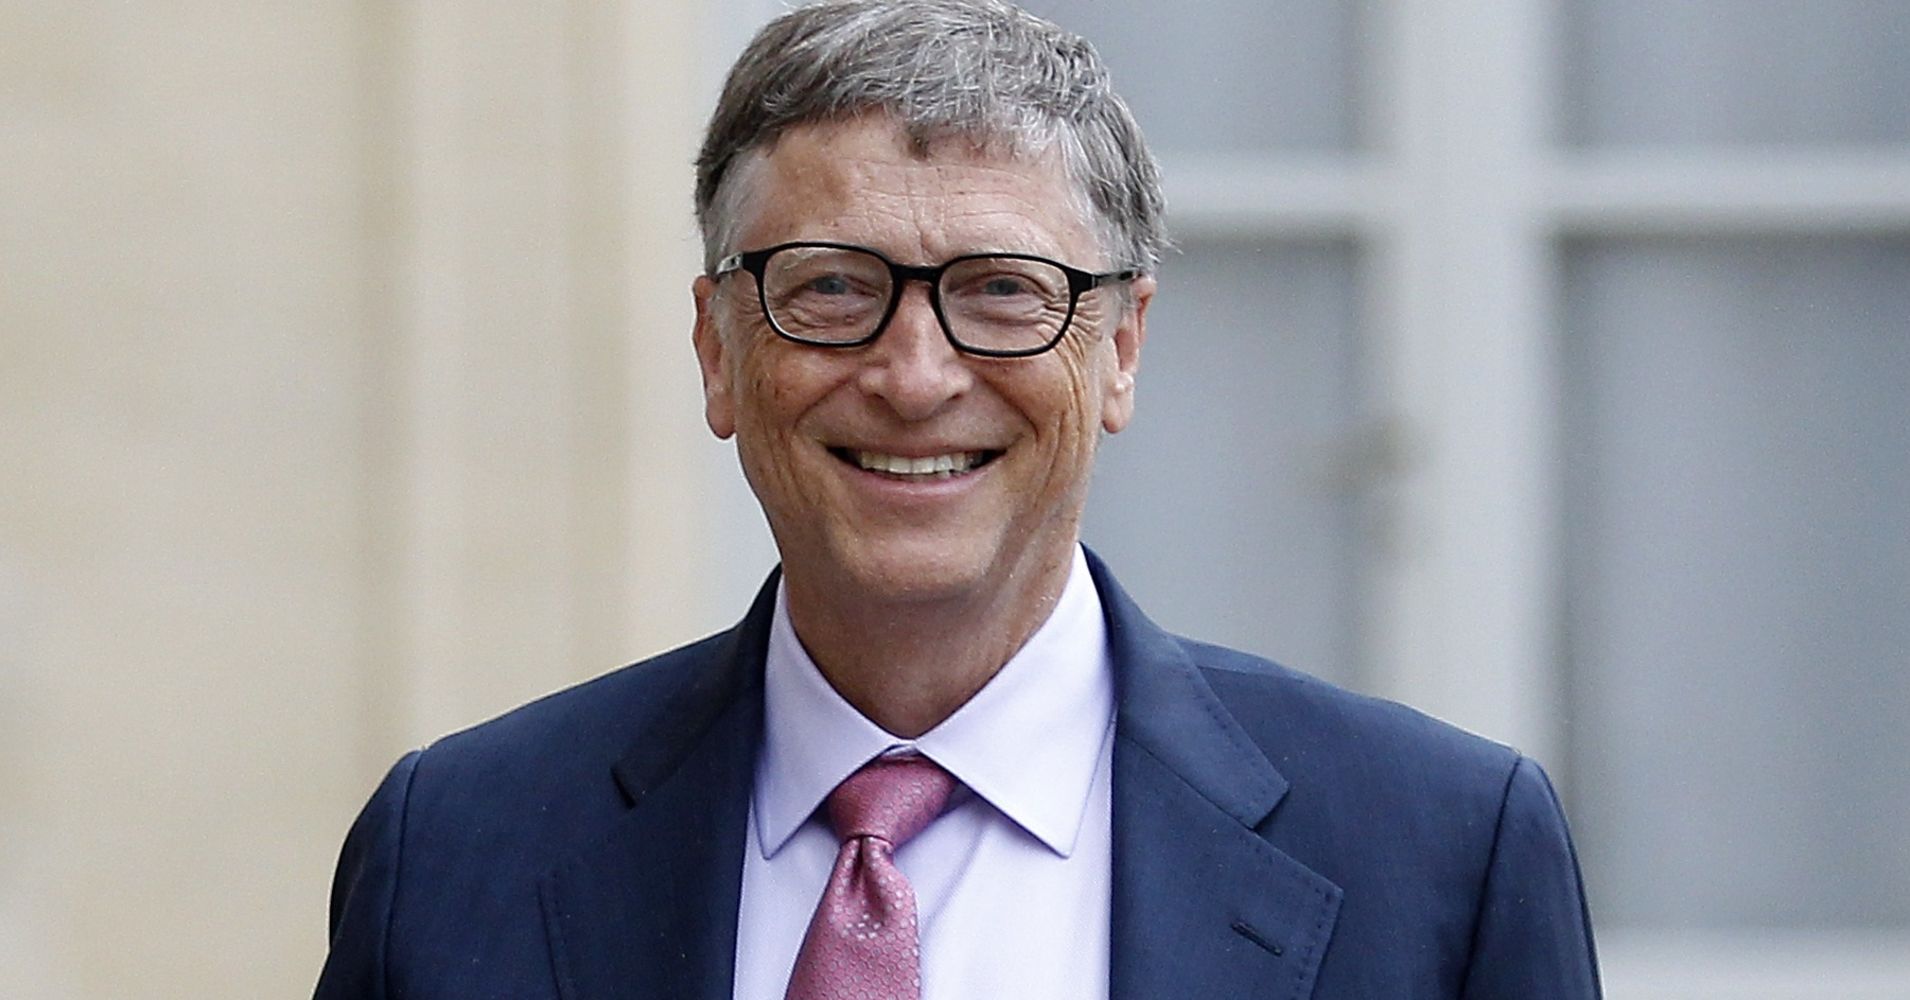 19 crazy facts about Bill Gates’ $127 million mansion